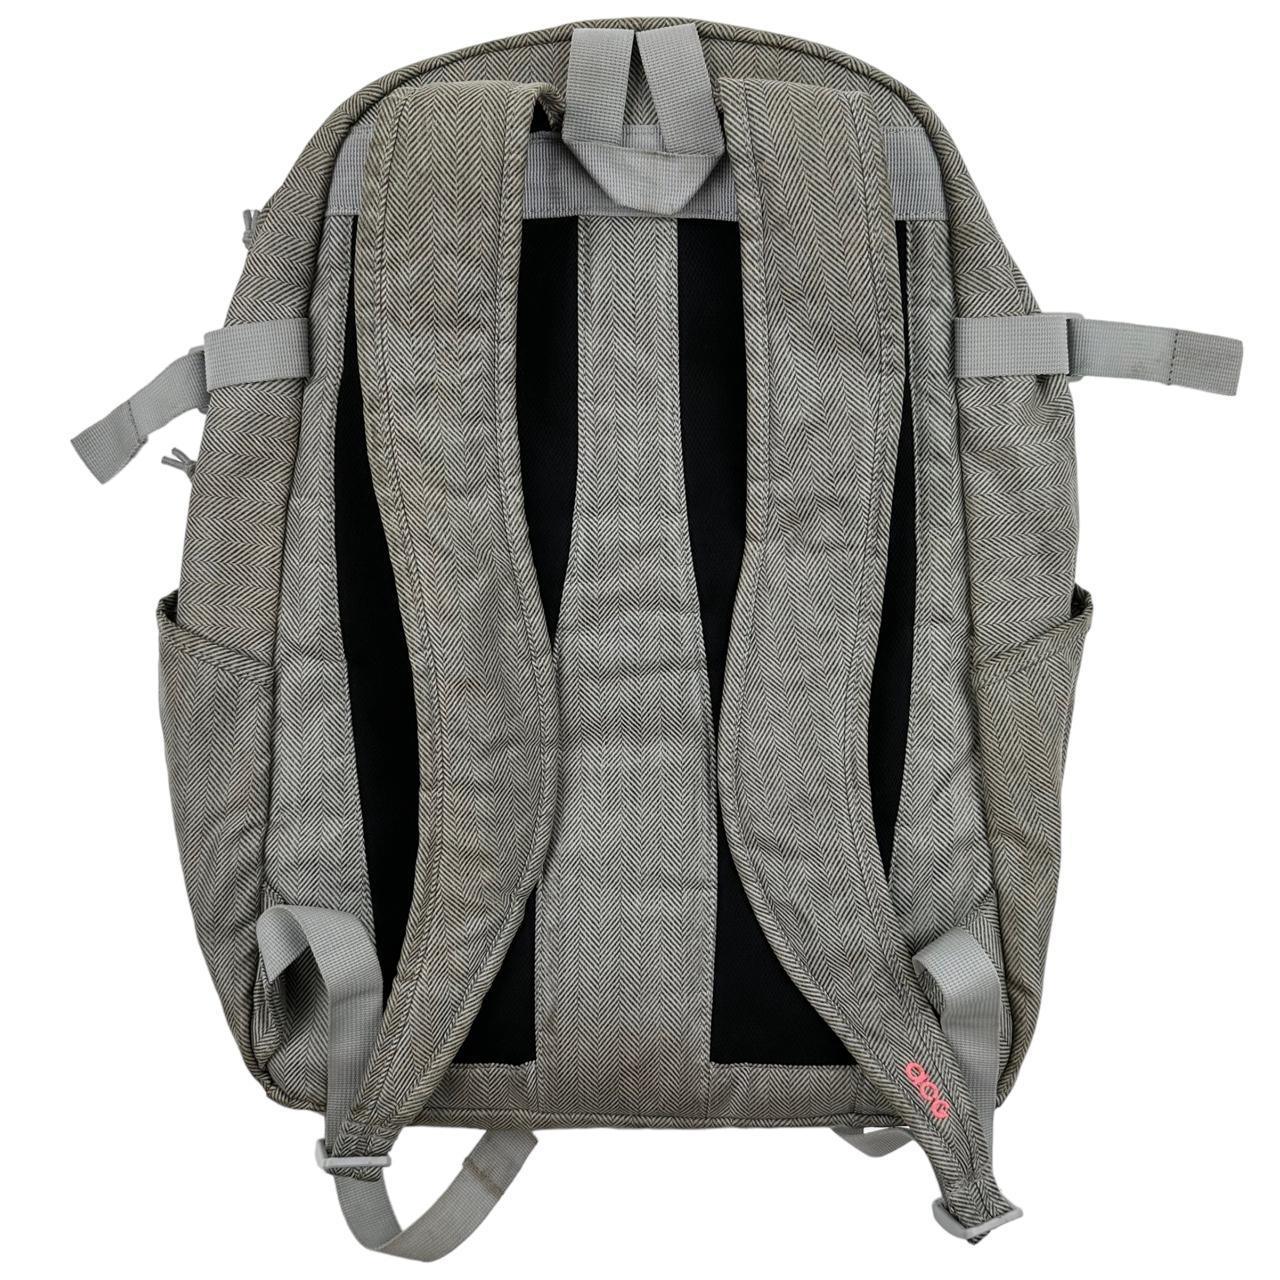 Vintage Nike ACG backpack - Known Source